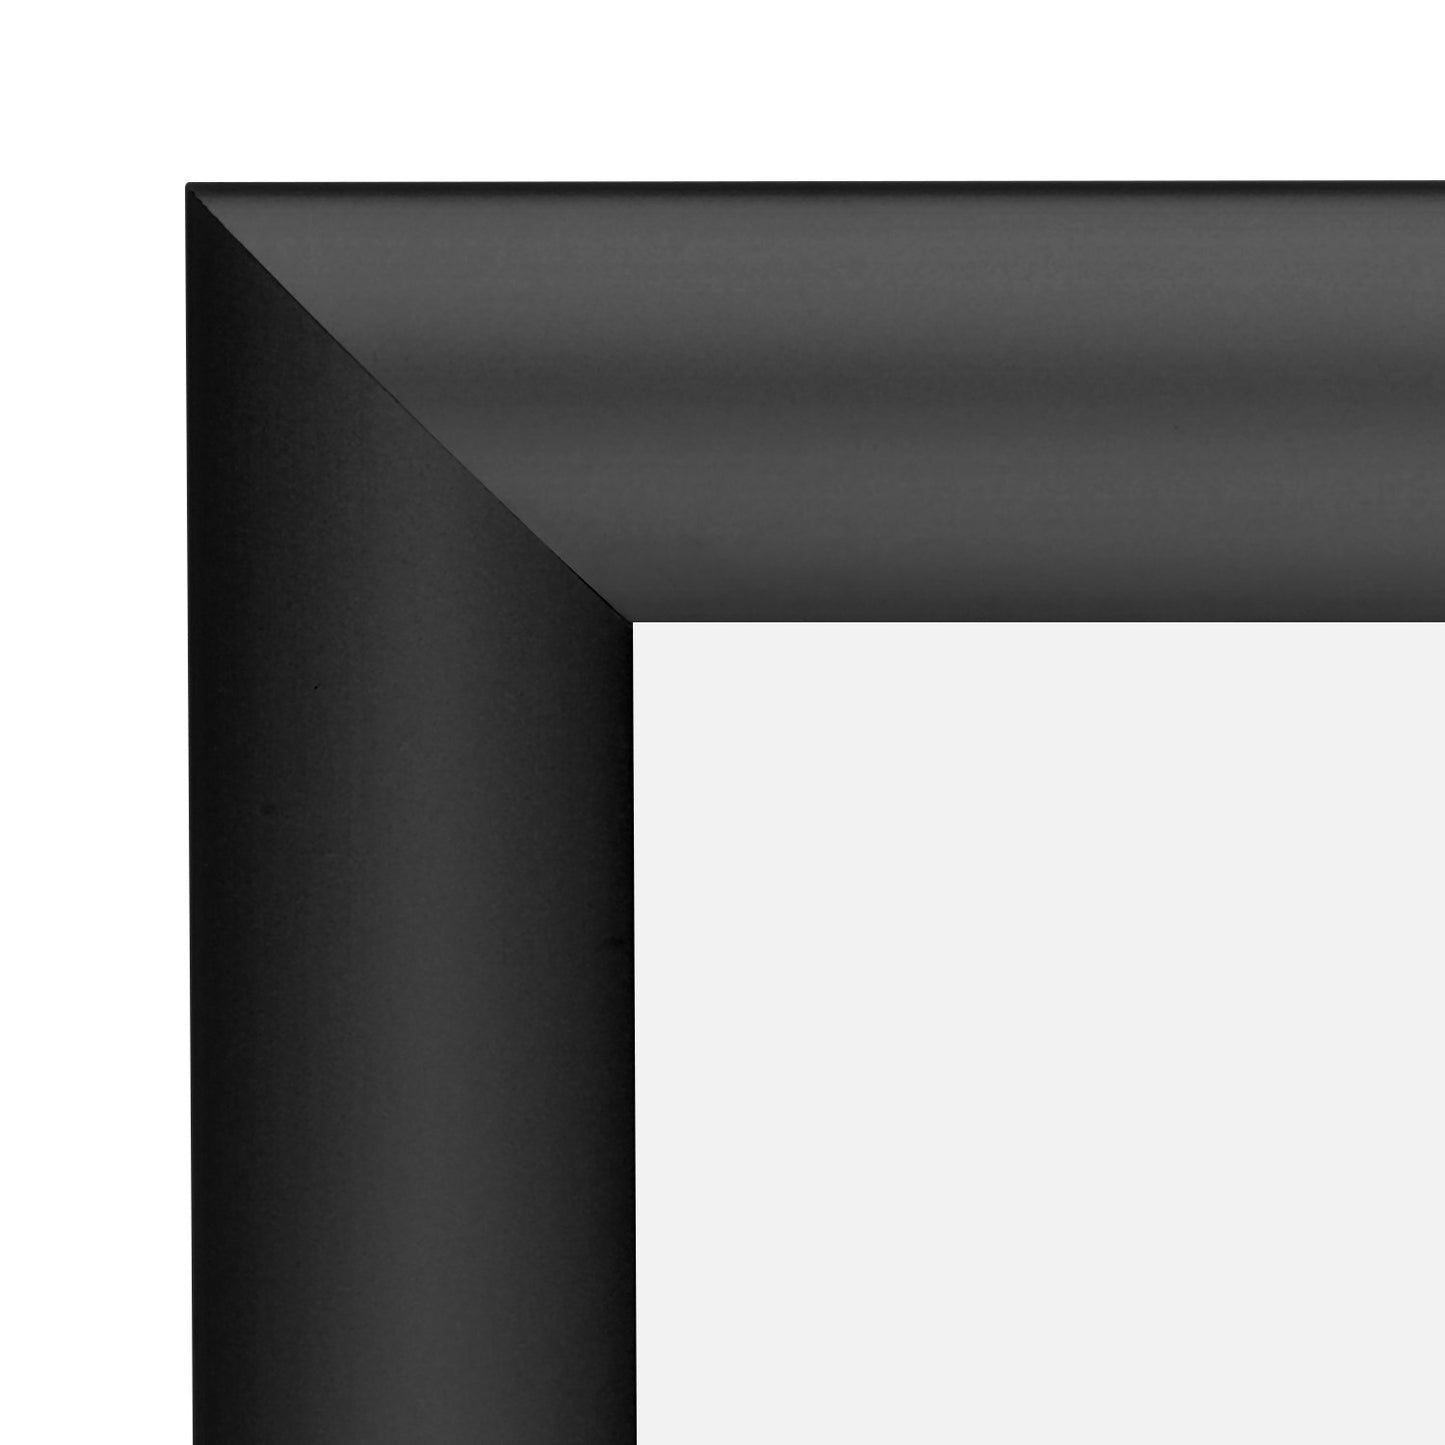 Marco a presión negro de 21,59 x 35,56 cm - Perfil de 25 mm